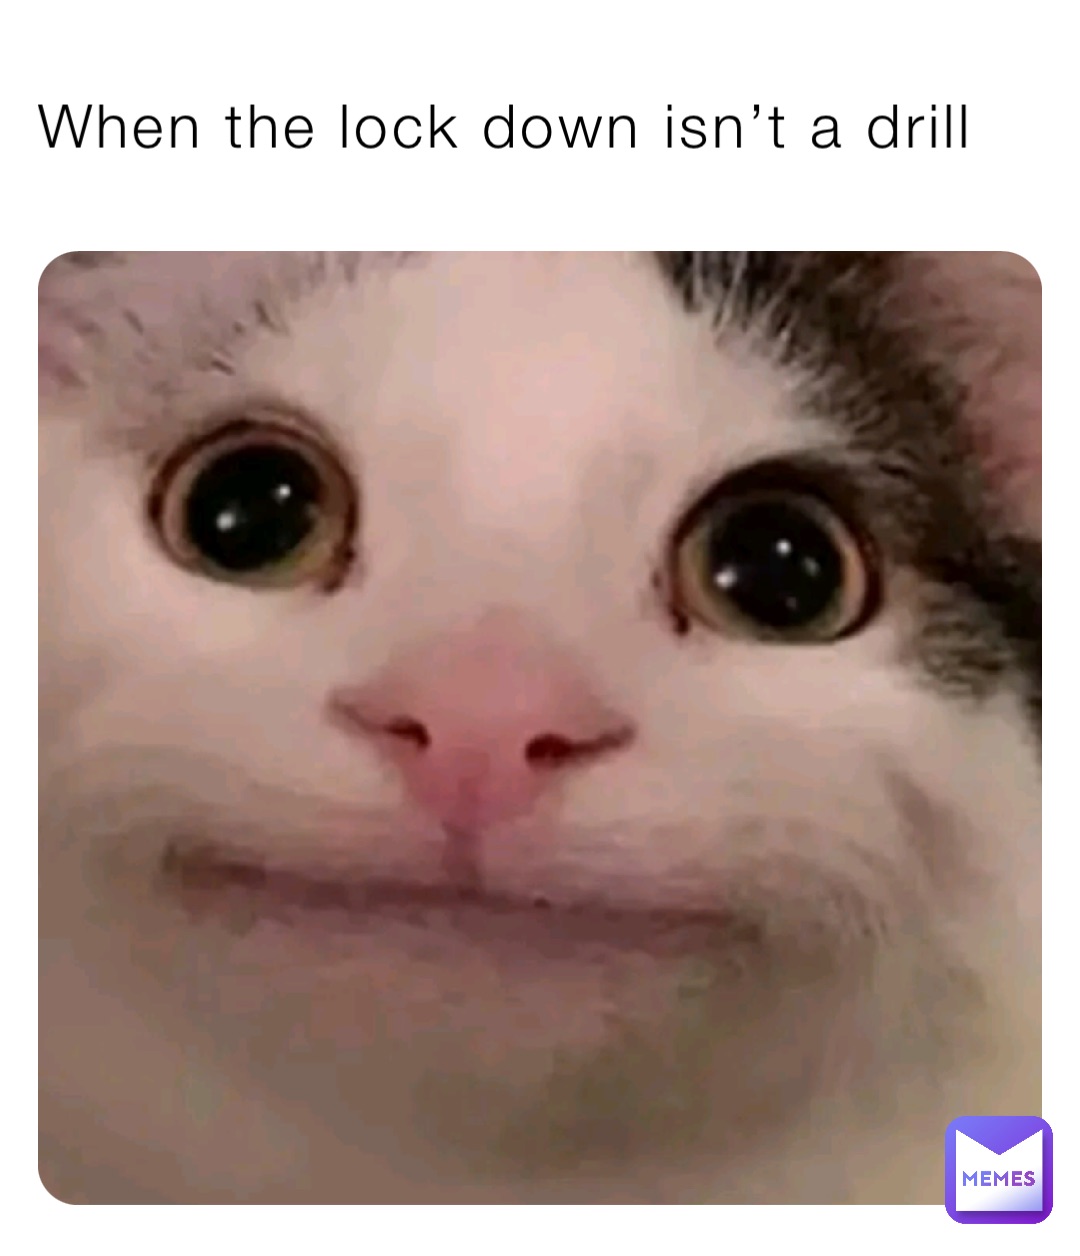 When the lock down isn’t a drill